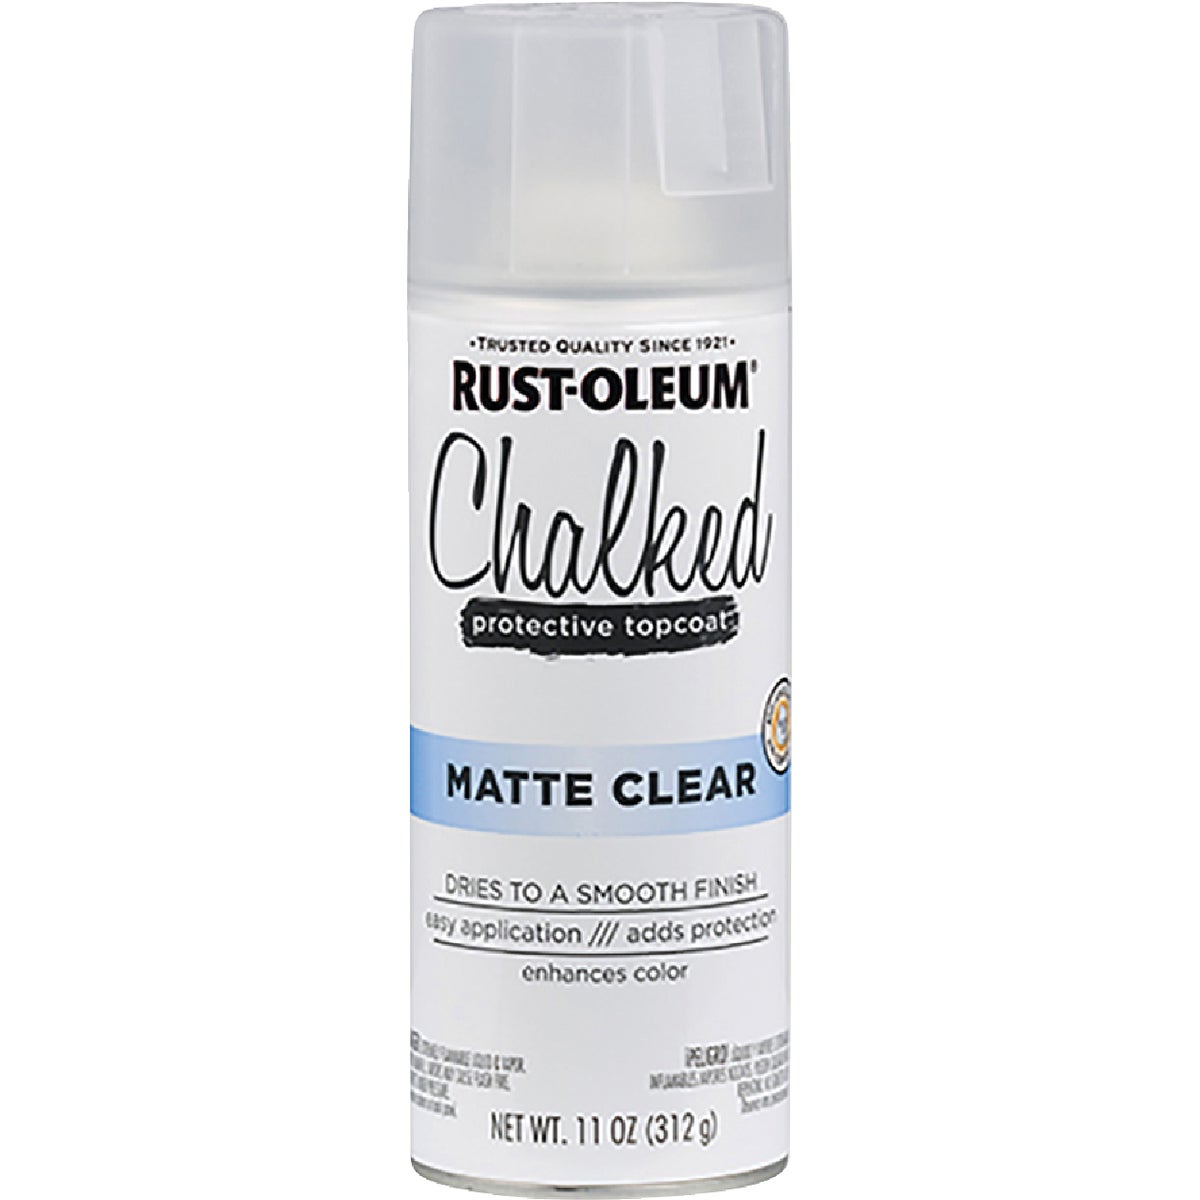 Rust-Oleum Chalked 12 Oz. Ultra Matte Spray Paint, Clear